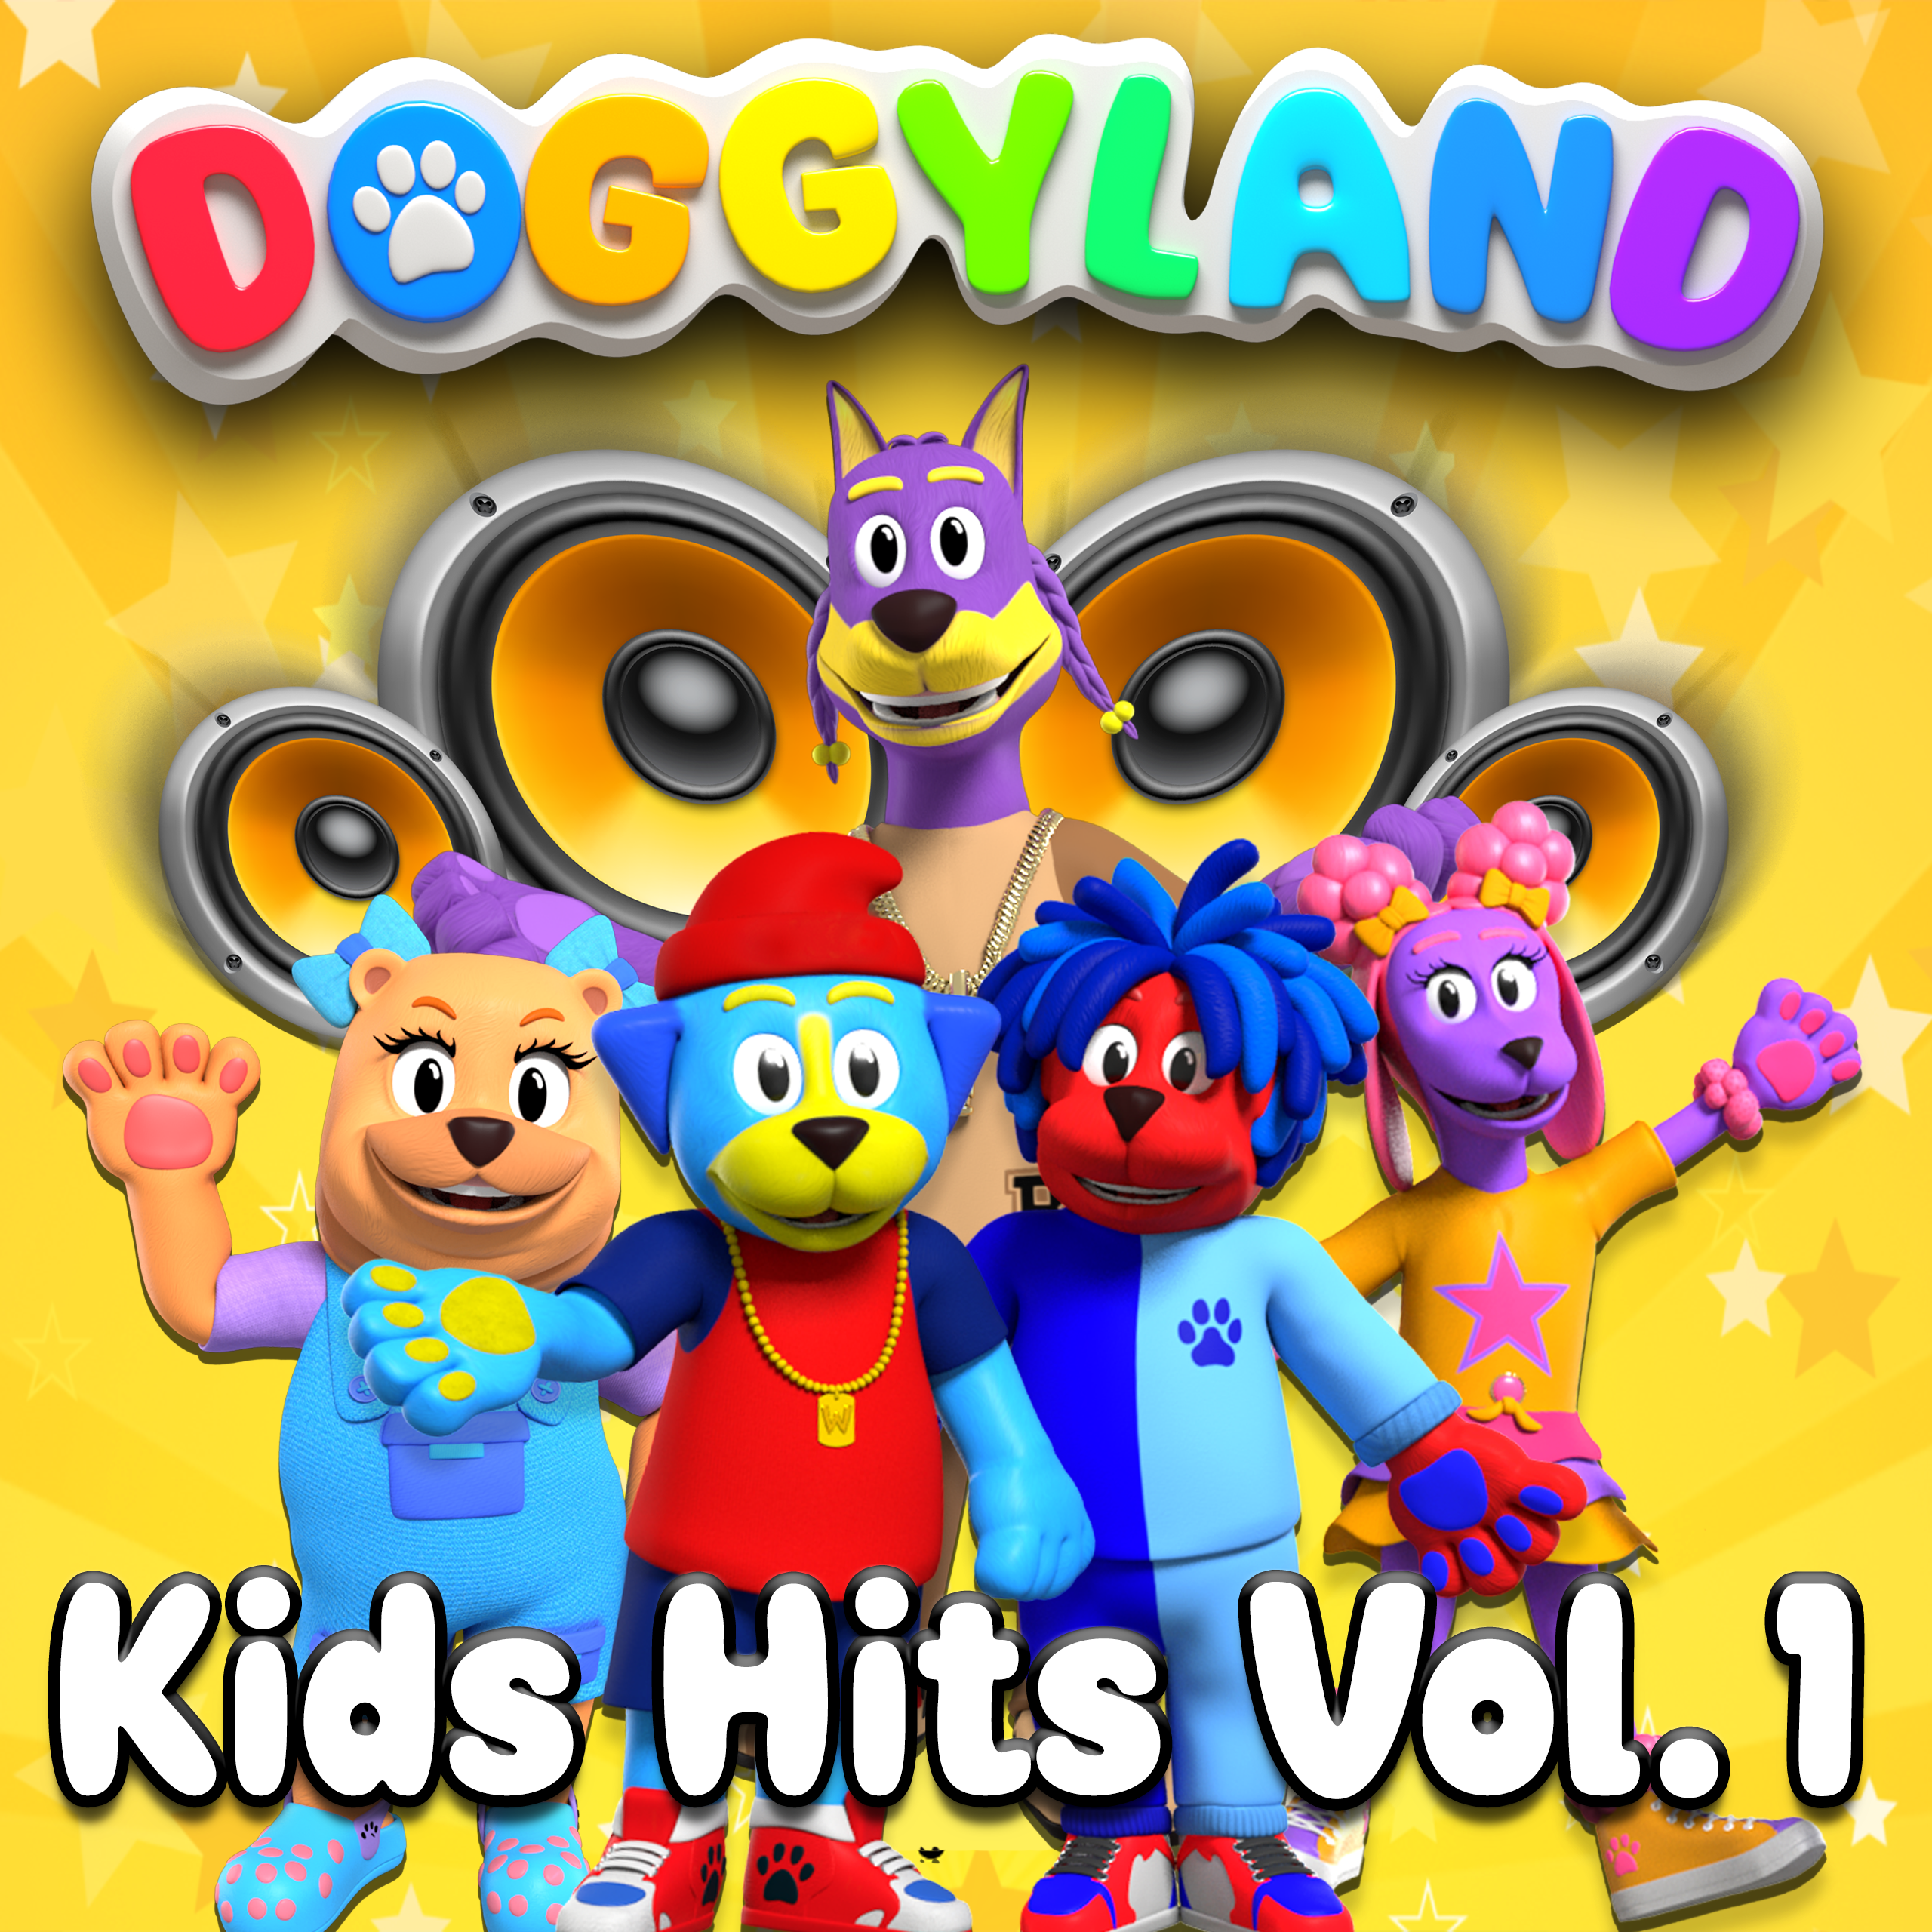 Doggyland Kids Vol. 1